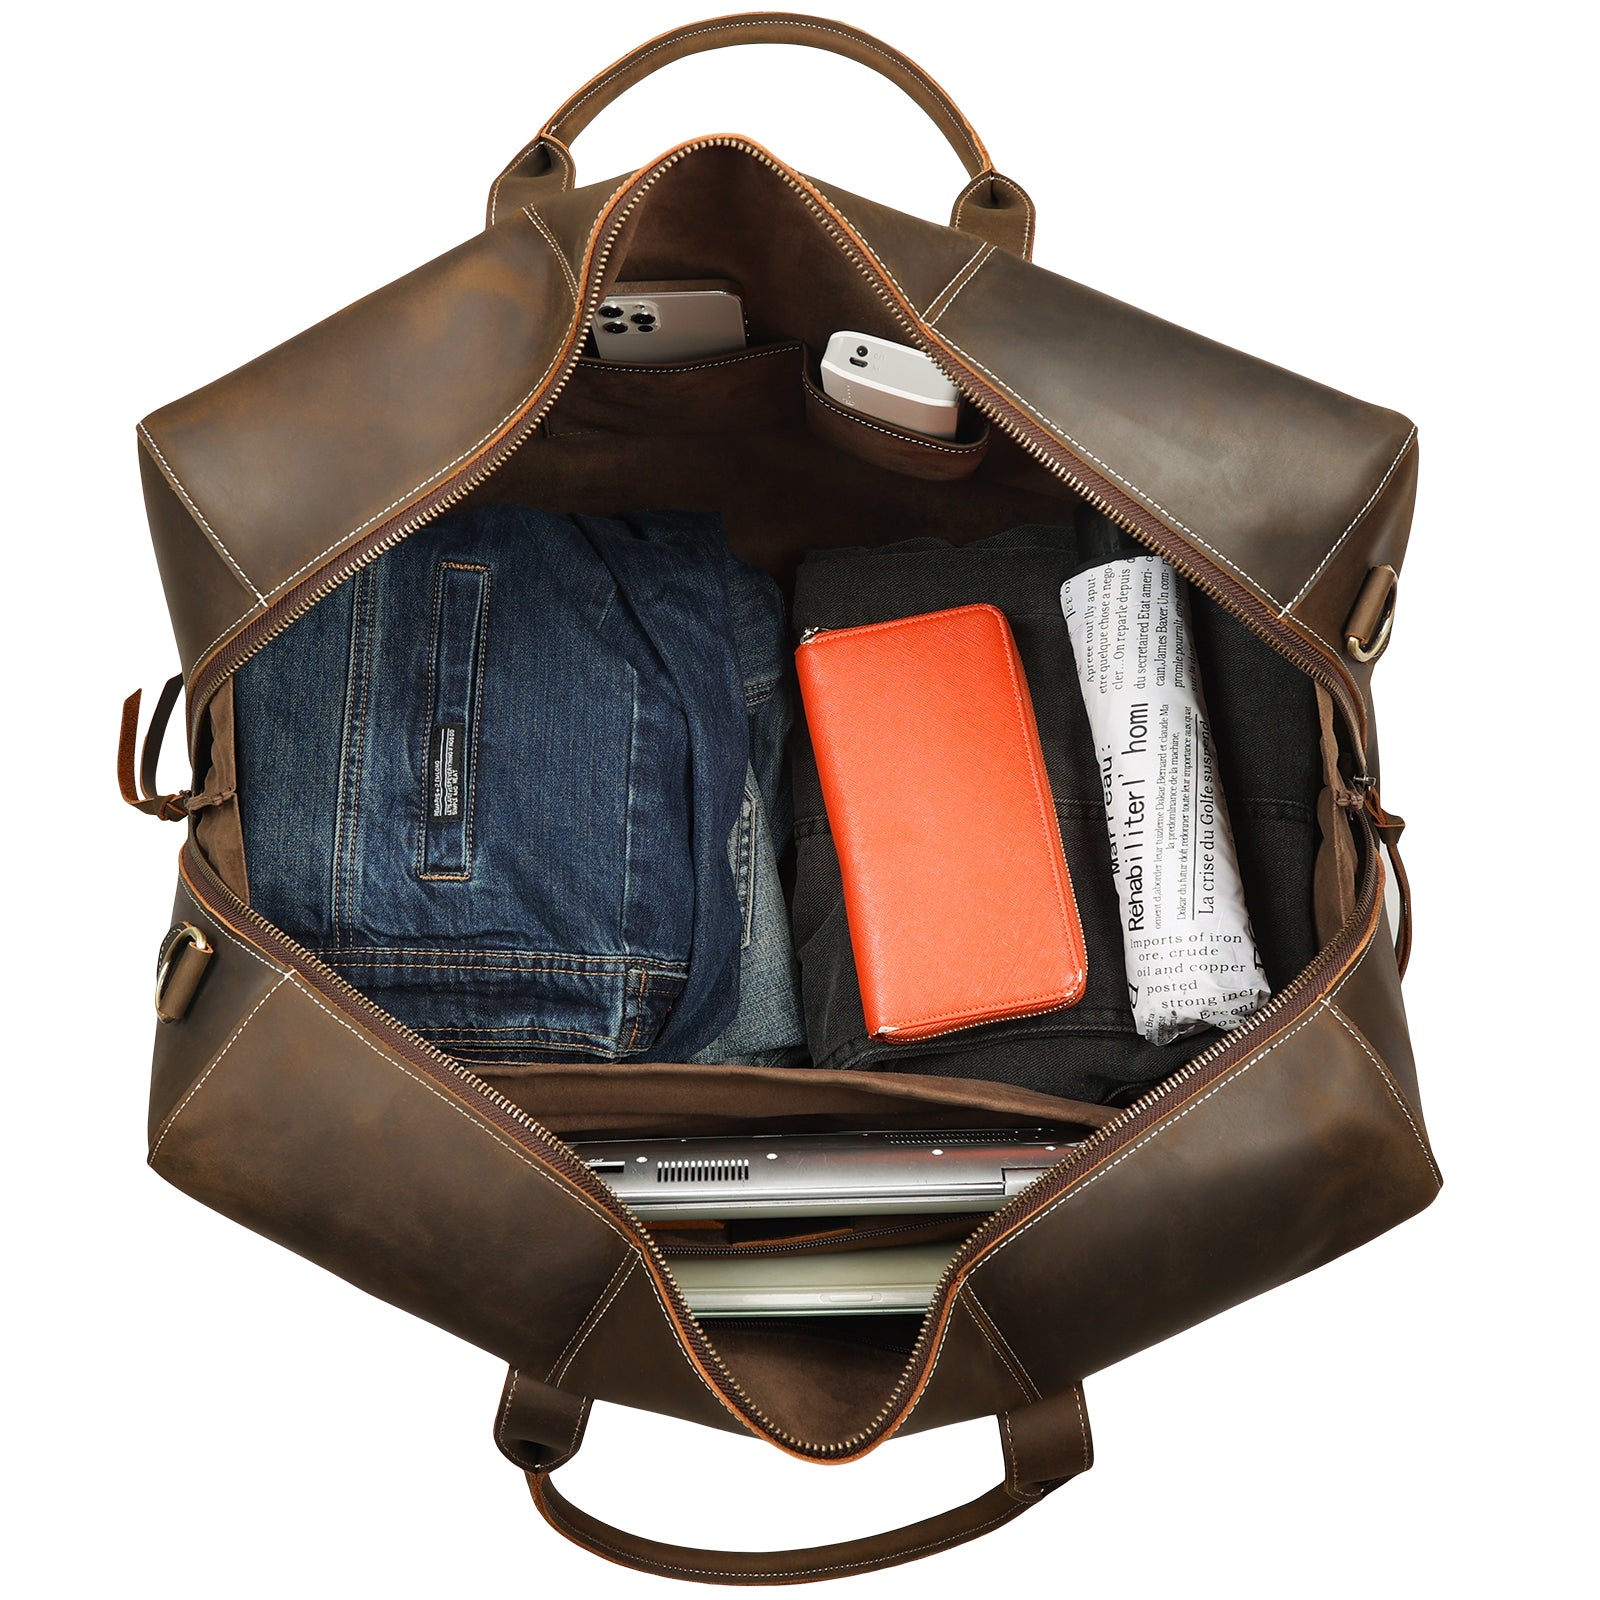 Quel sac à main pour voyager ?  Leather weekender bag, Leather